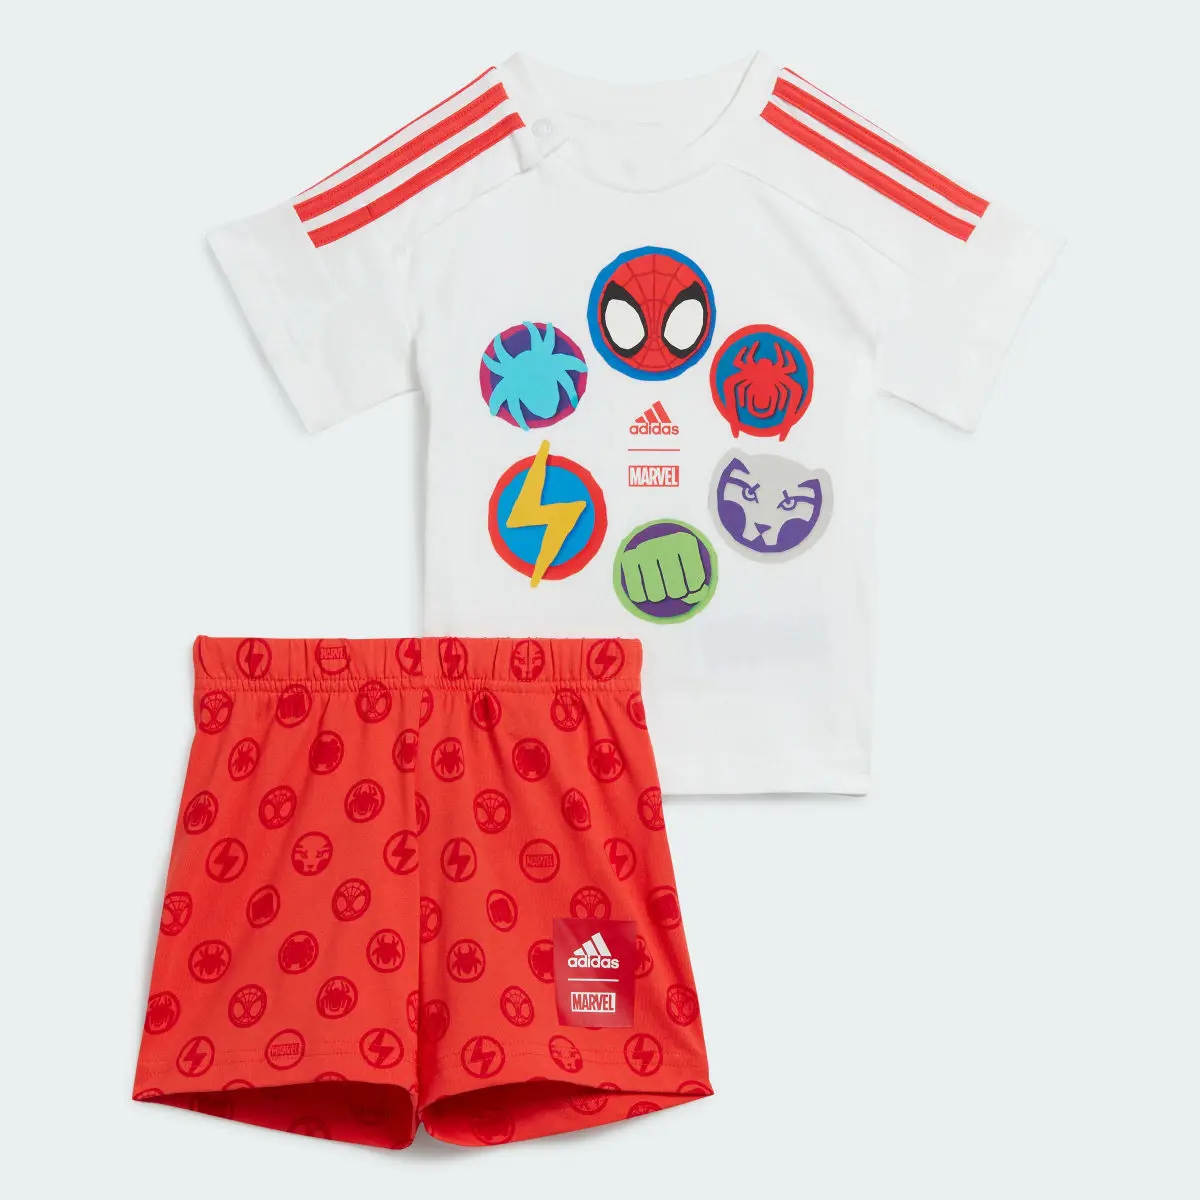 Adidas x Marvel Spider-Man Tişört ve Şort Takımı. 2